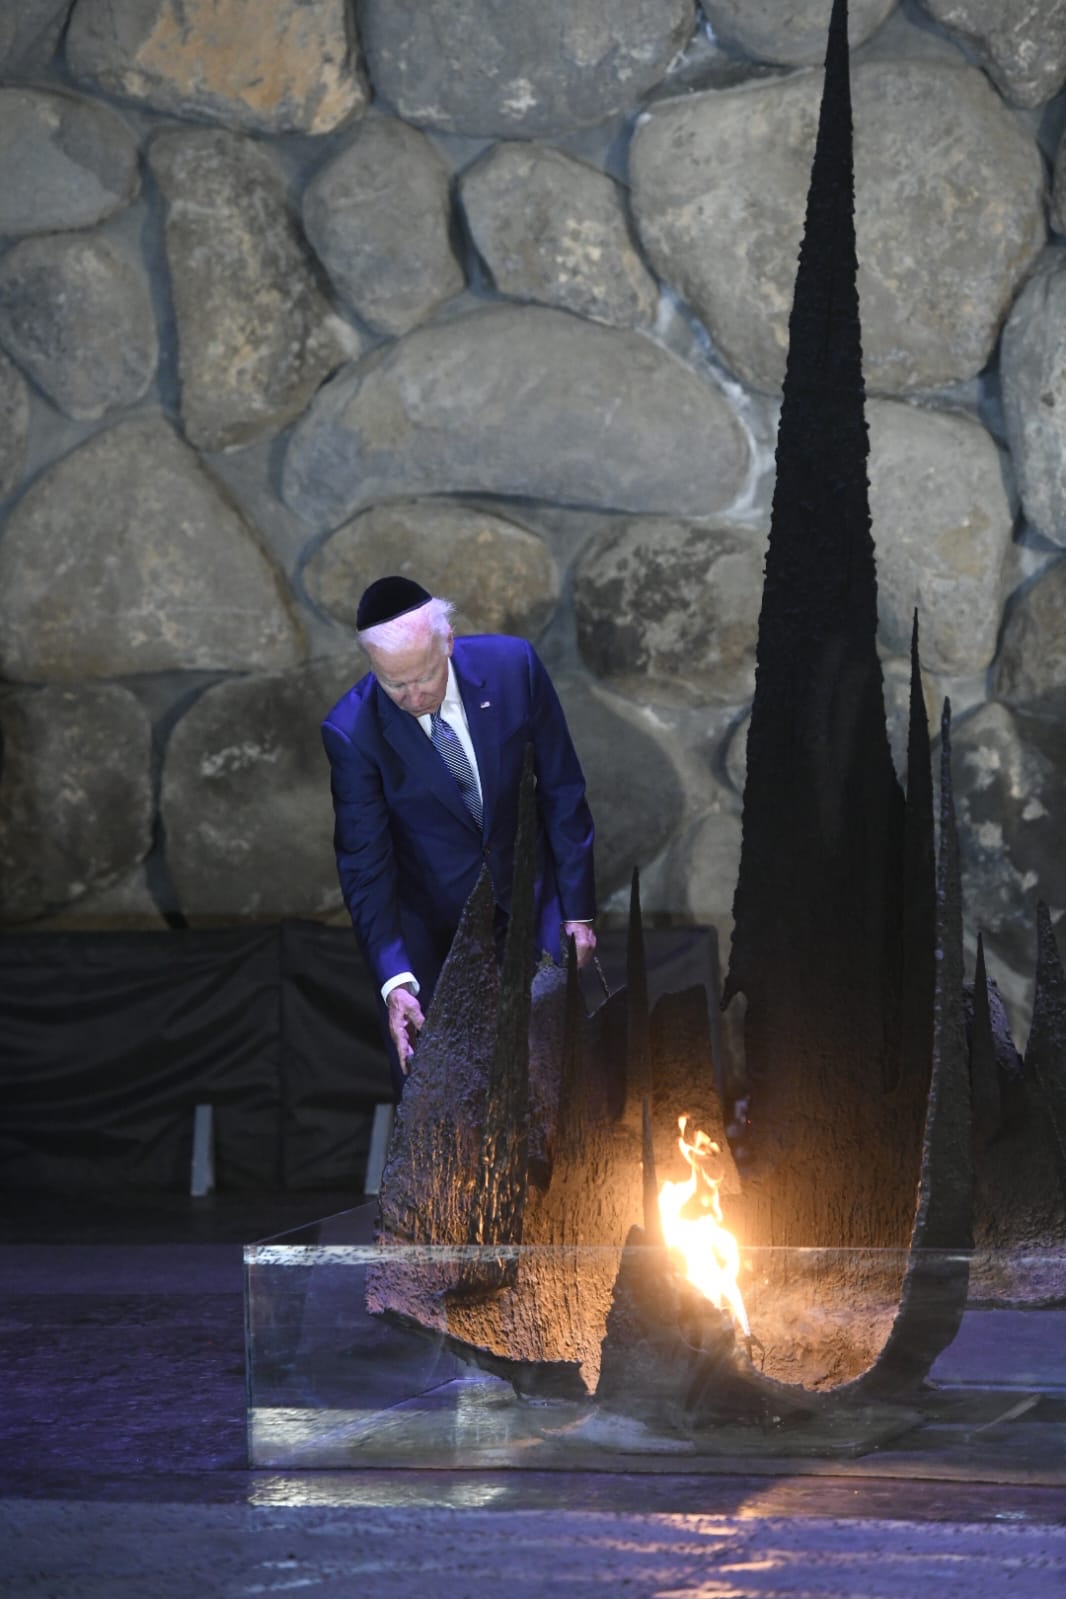 President Biden rekindles the Eternal Flame at the memorial ceremony